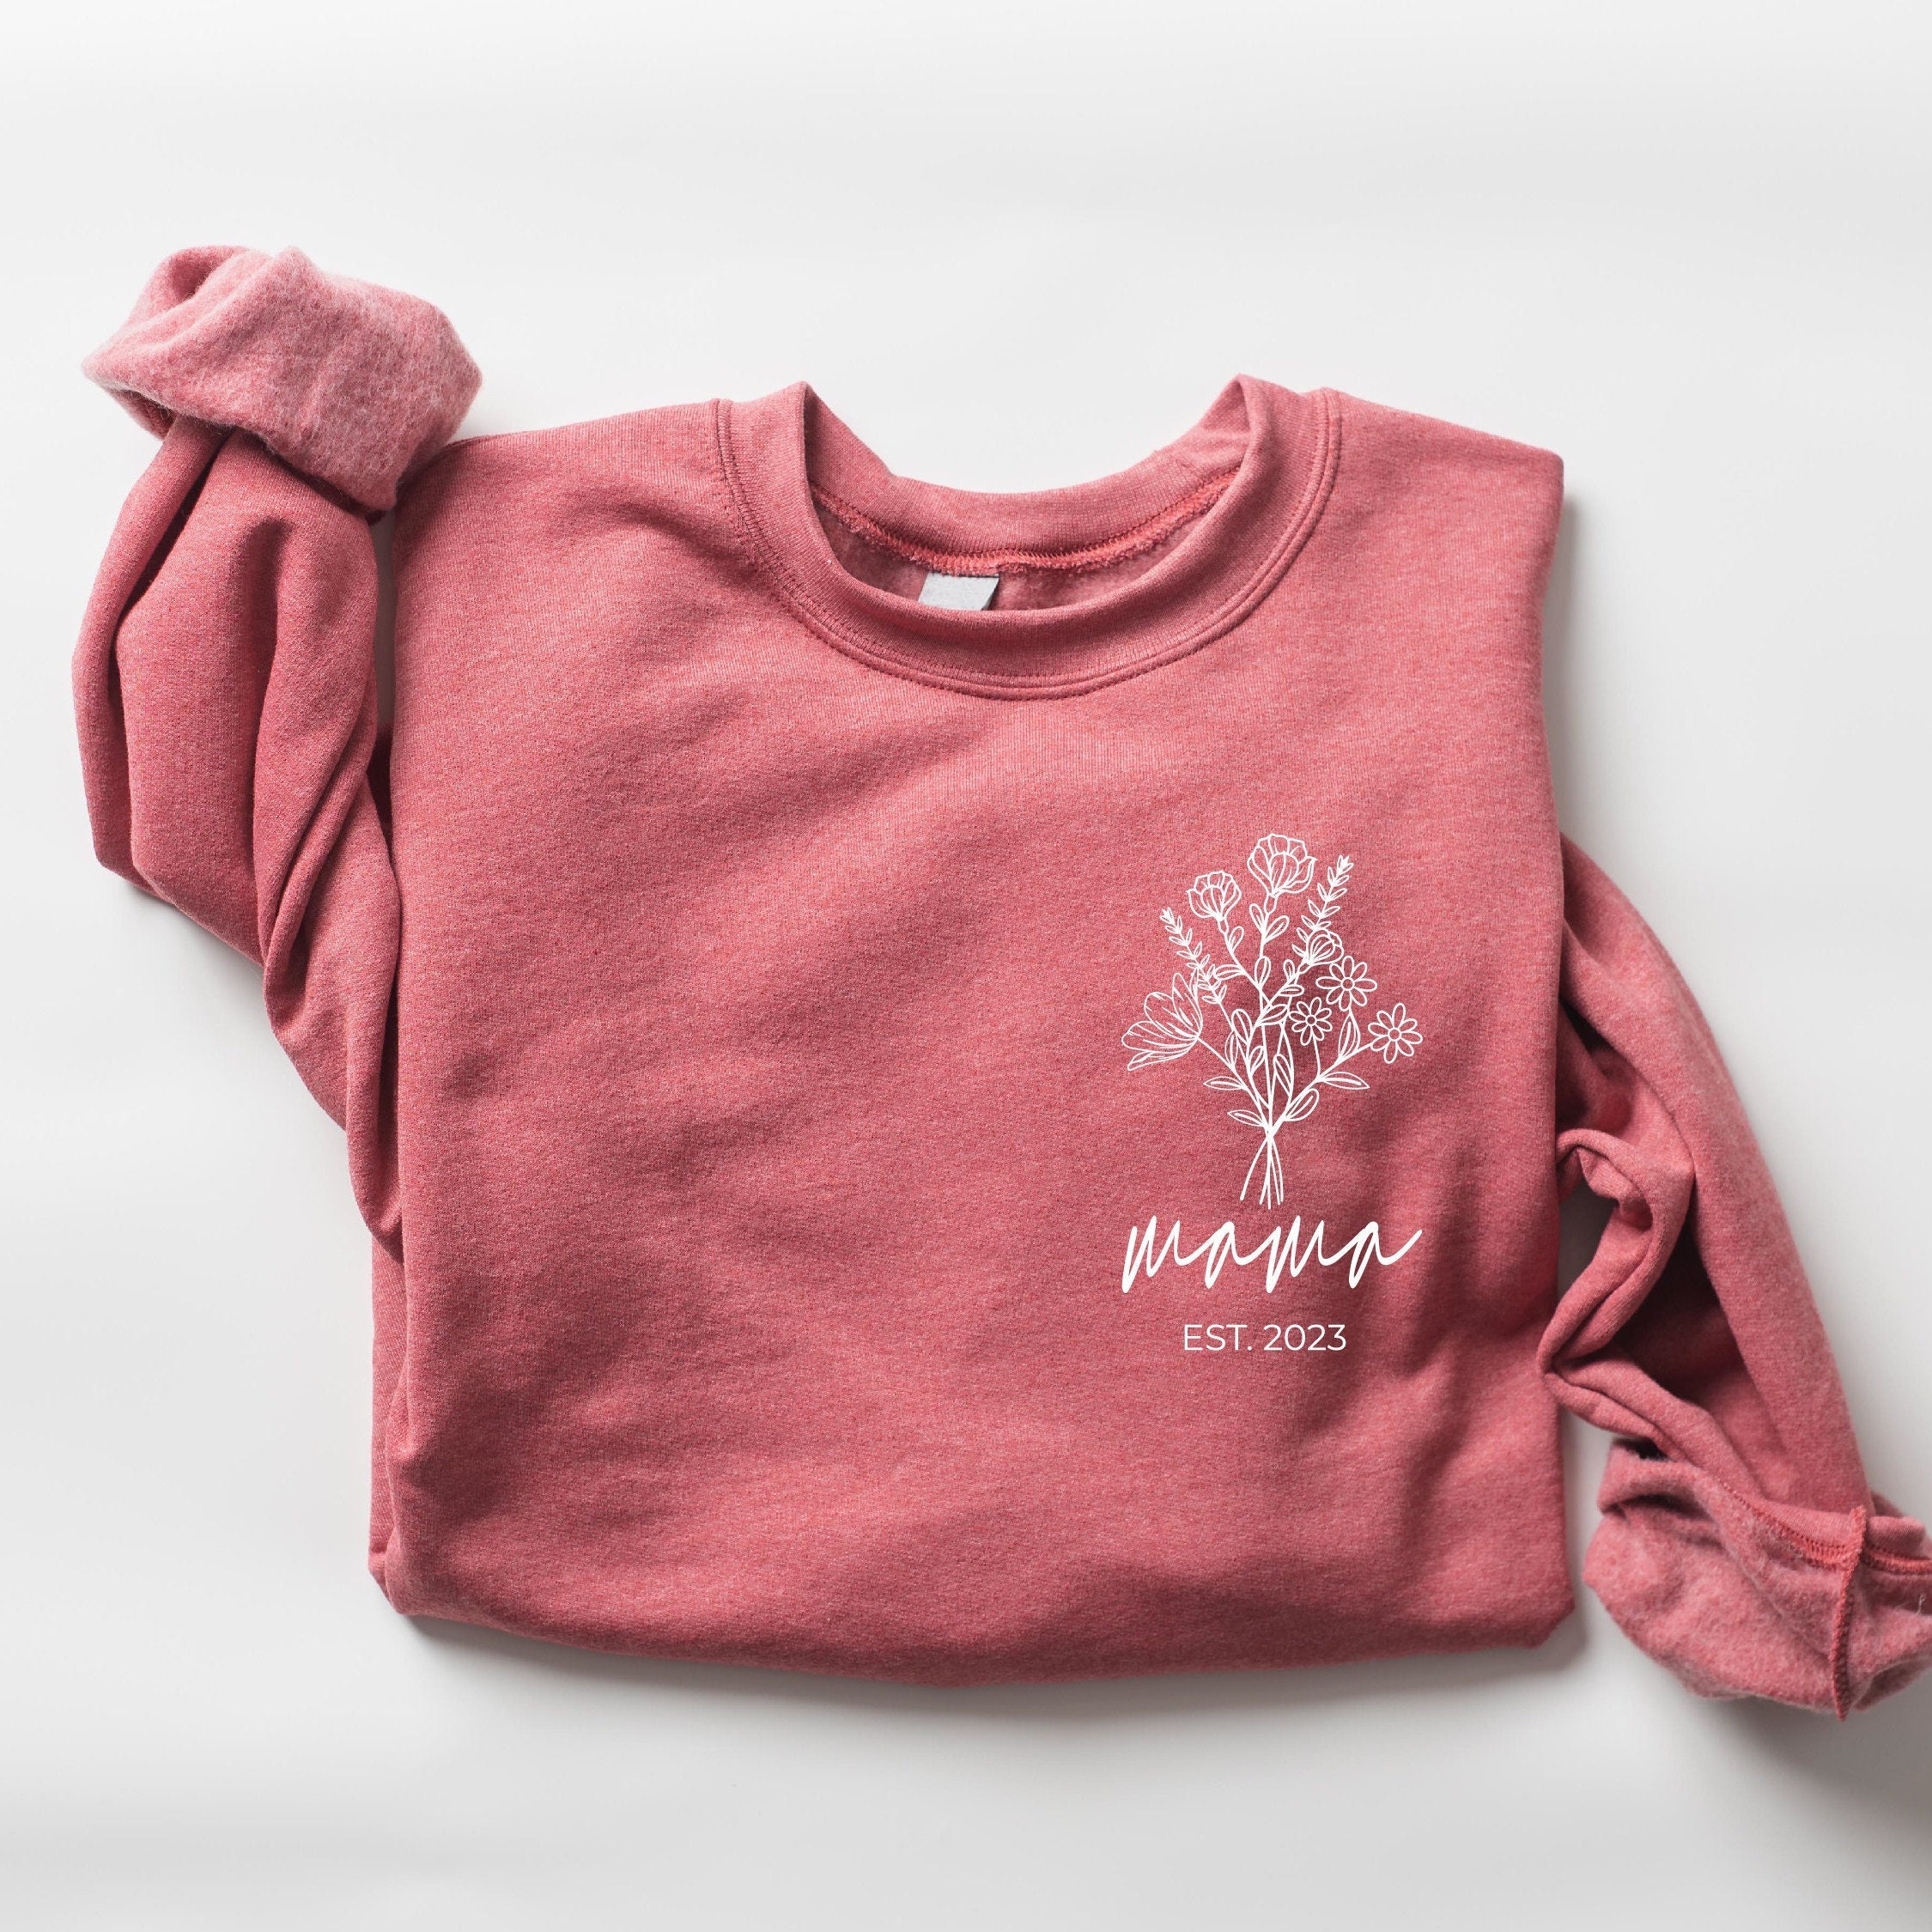 Cozy Mama Crewneck Sweatshirt - A Stylish Gift for Moms